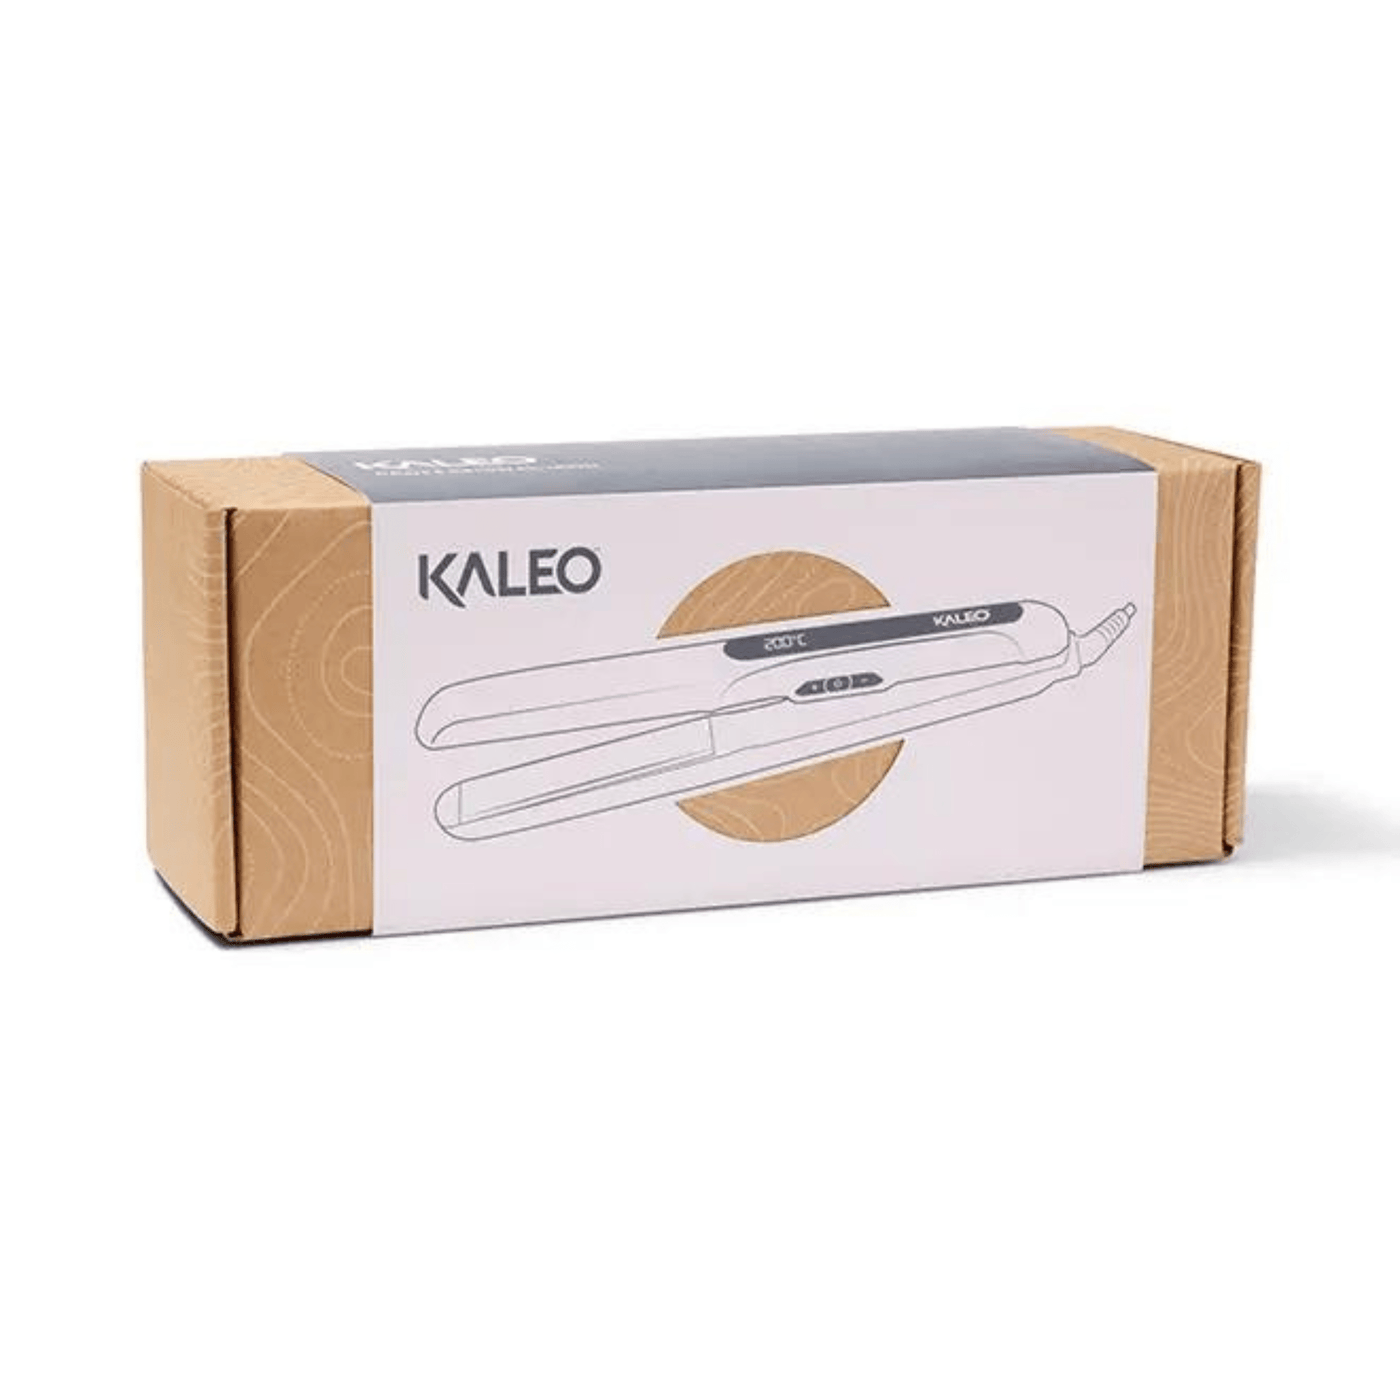 Kaleo Kaleo Professional Wide Iron Hair Straightener